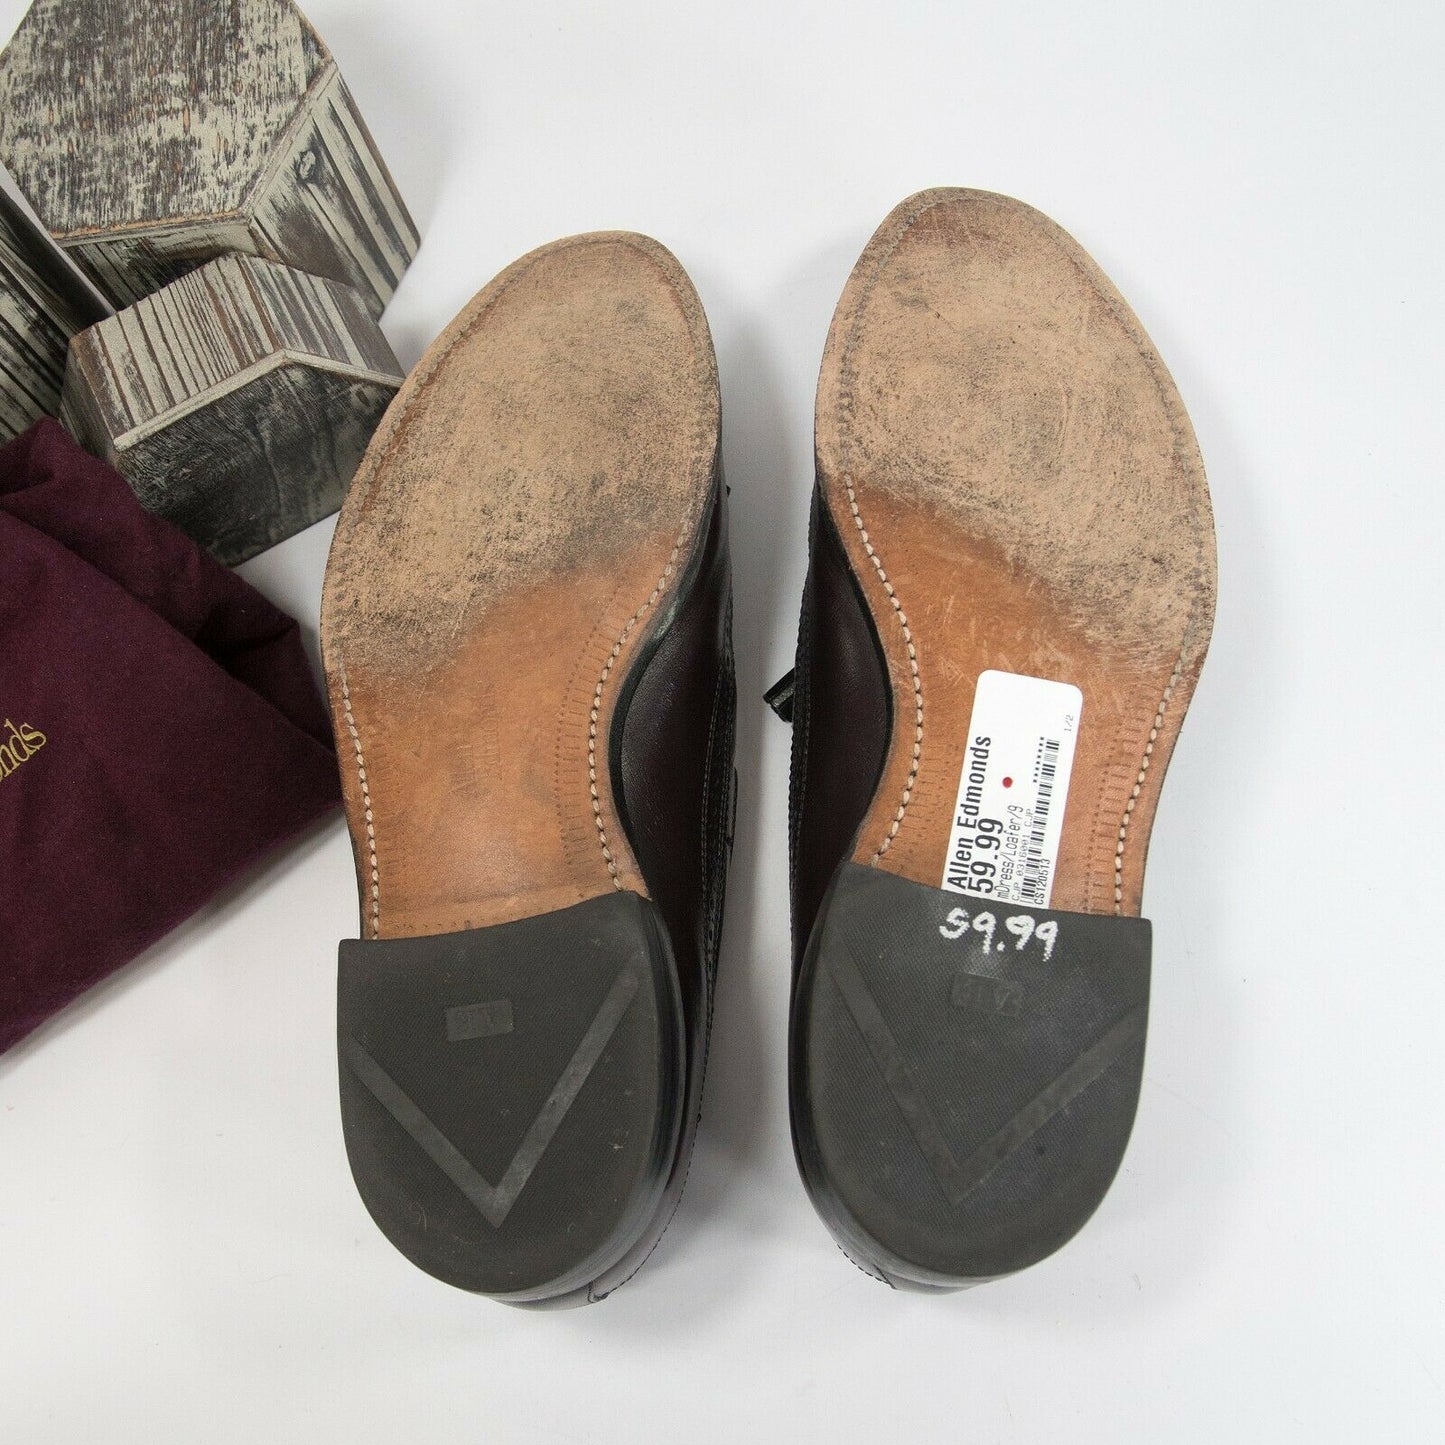 Allen Edmonds Cherry Leather Wing Tip Tassel Oxford Loafer Size 9